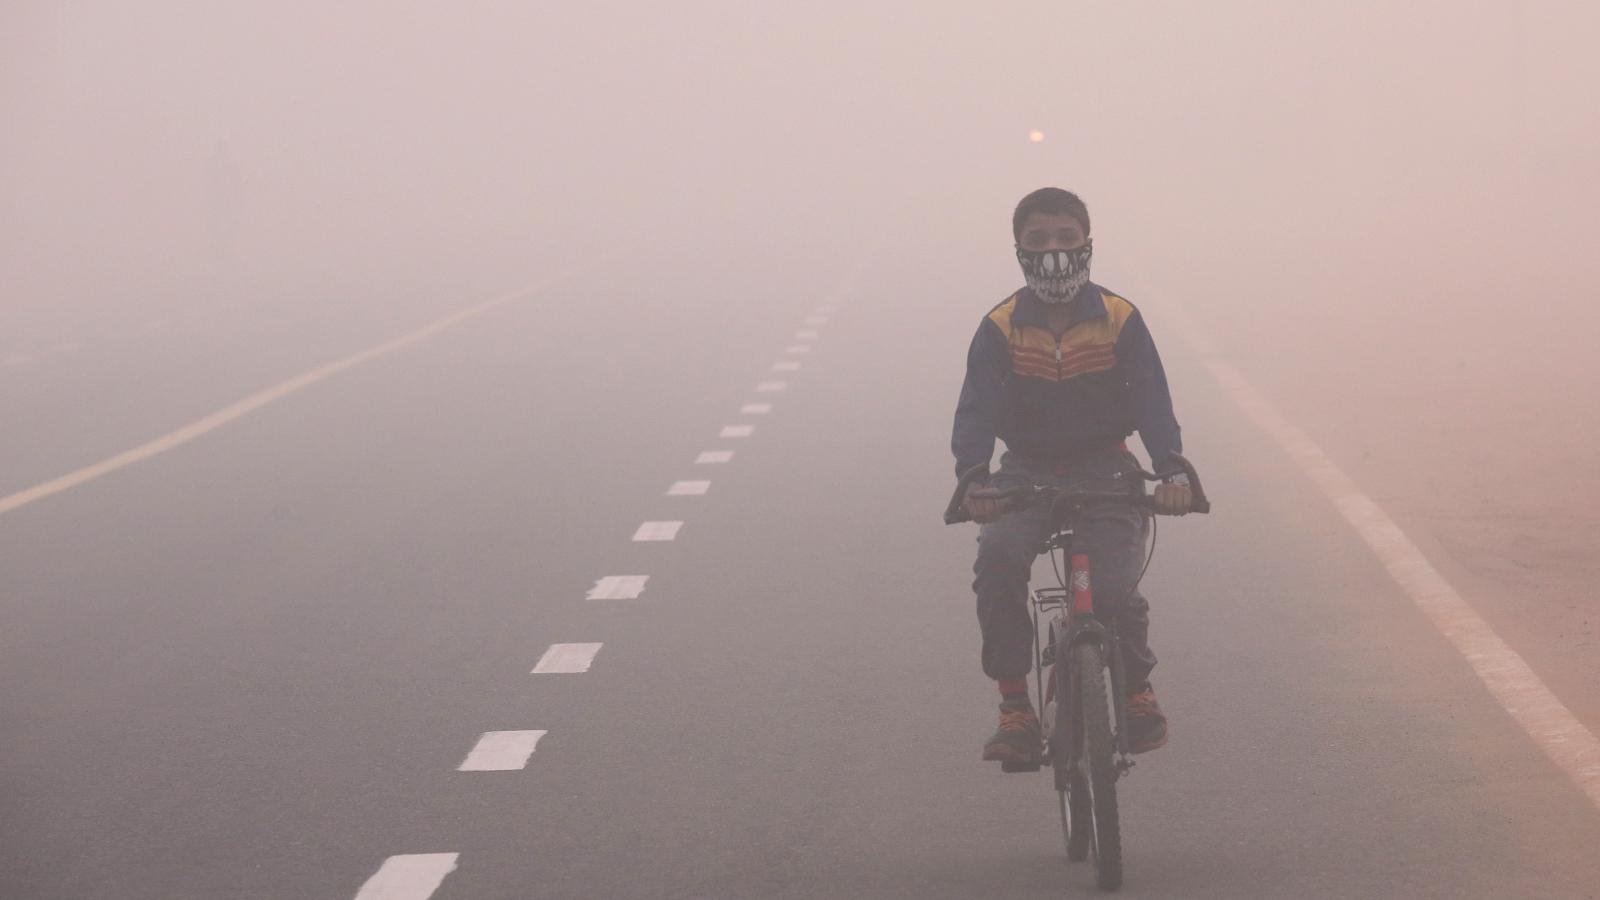 More information about "Στην Ινδία οι επτά από τις δέκα πόλεις με την υψηλότερη ρύπανση στον κόσμο"